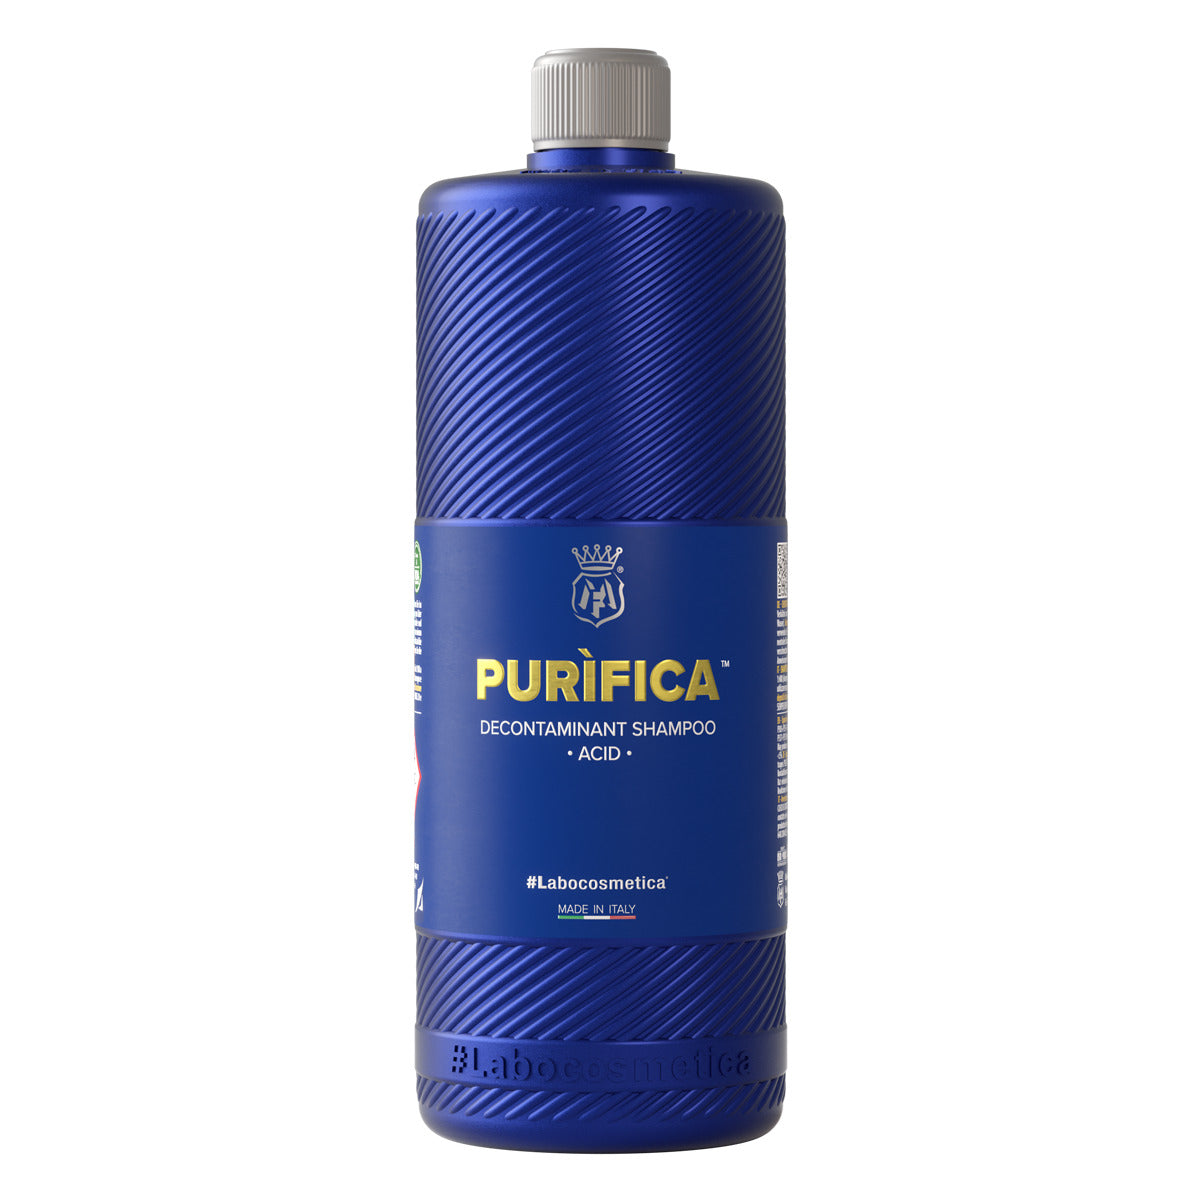 Labocosmetica Purifica Shampoo. Acid Shampoo for decontamination. Ceramic coating shampoo. Blue bottle with see through cap. Labocosmetica Cork Ireland